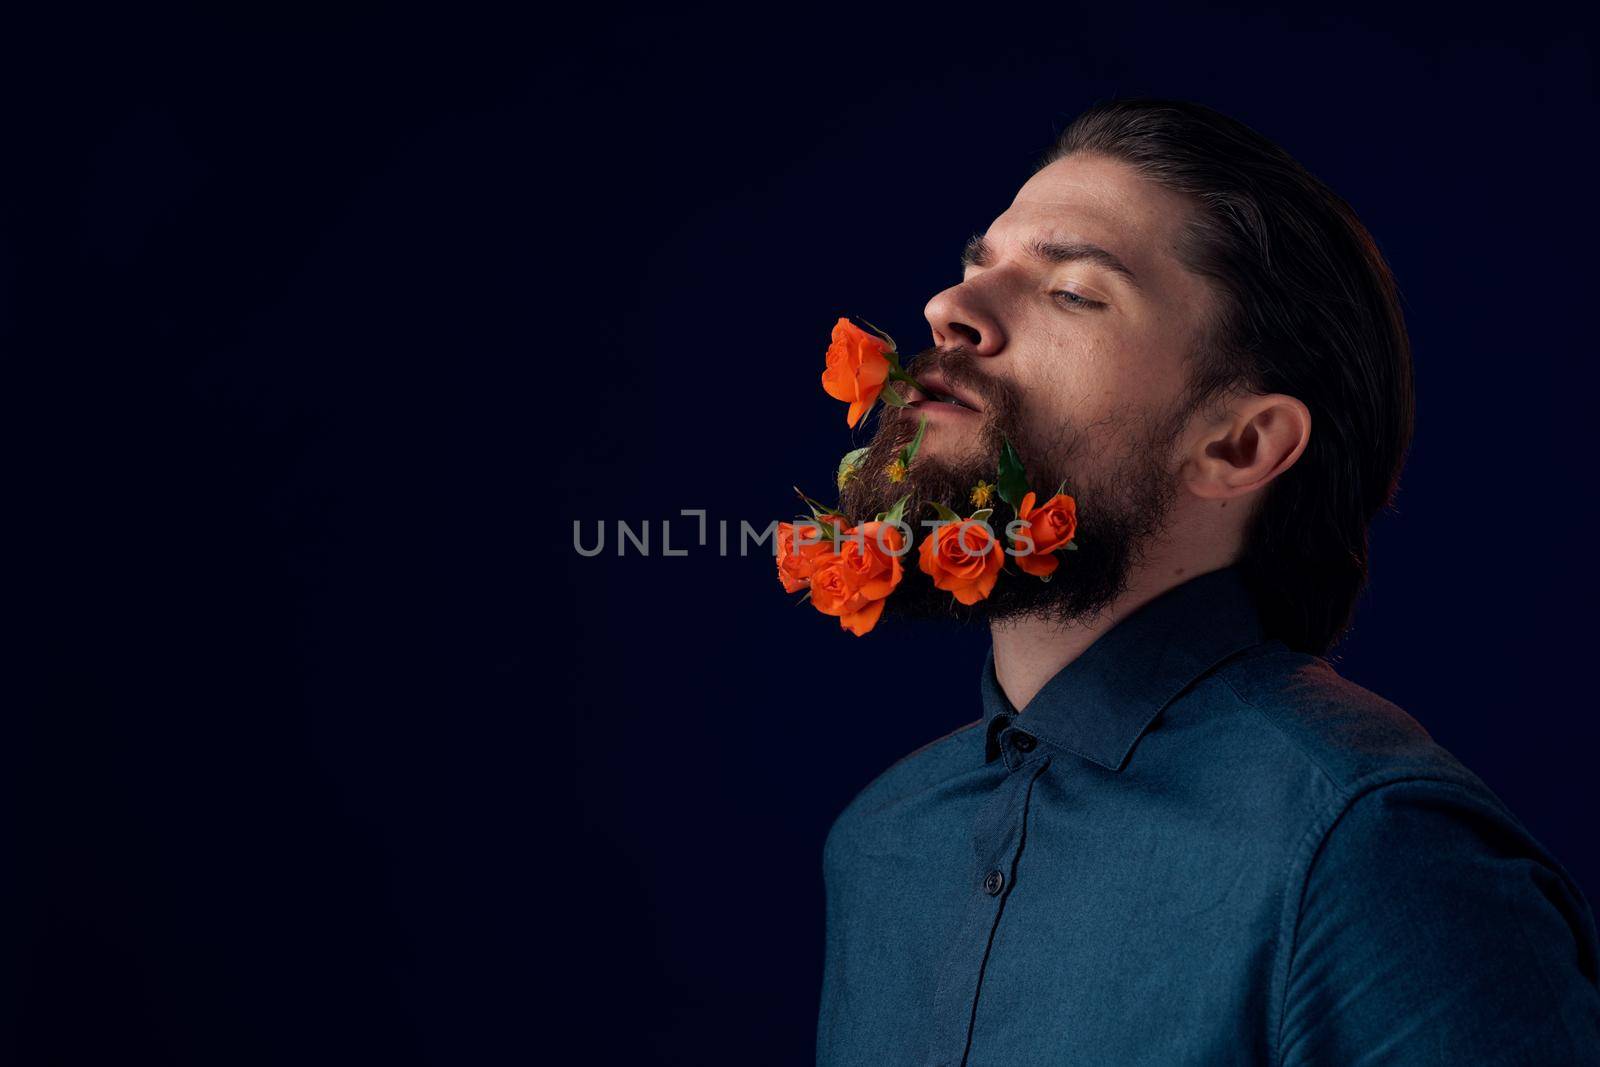 Elegant man in a shirt flowers in a beard charm romance dark background. High quality photo